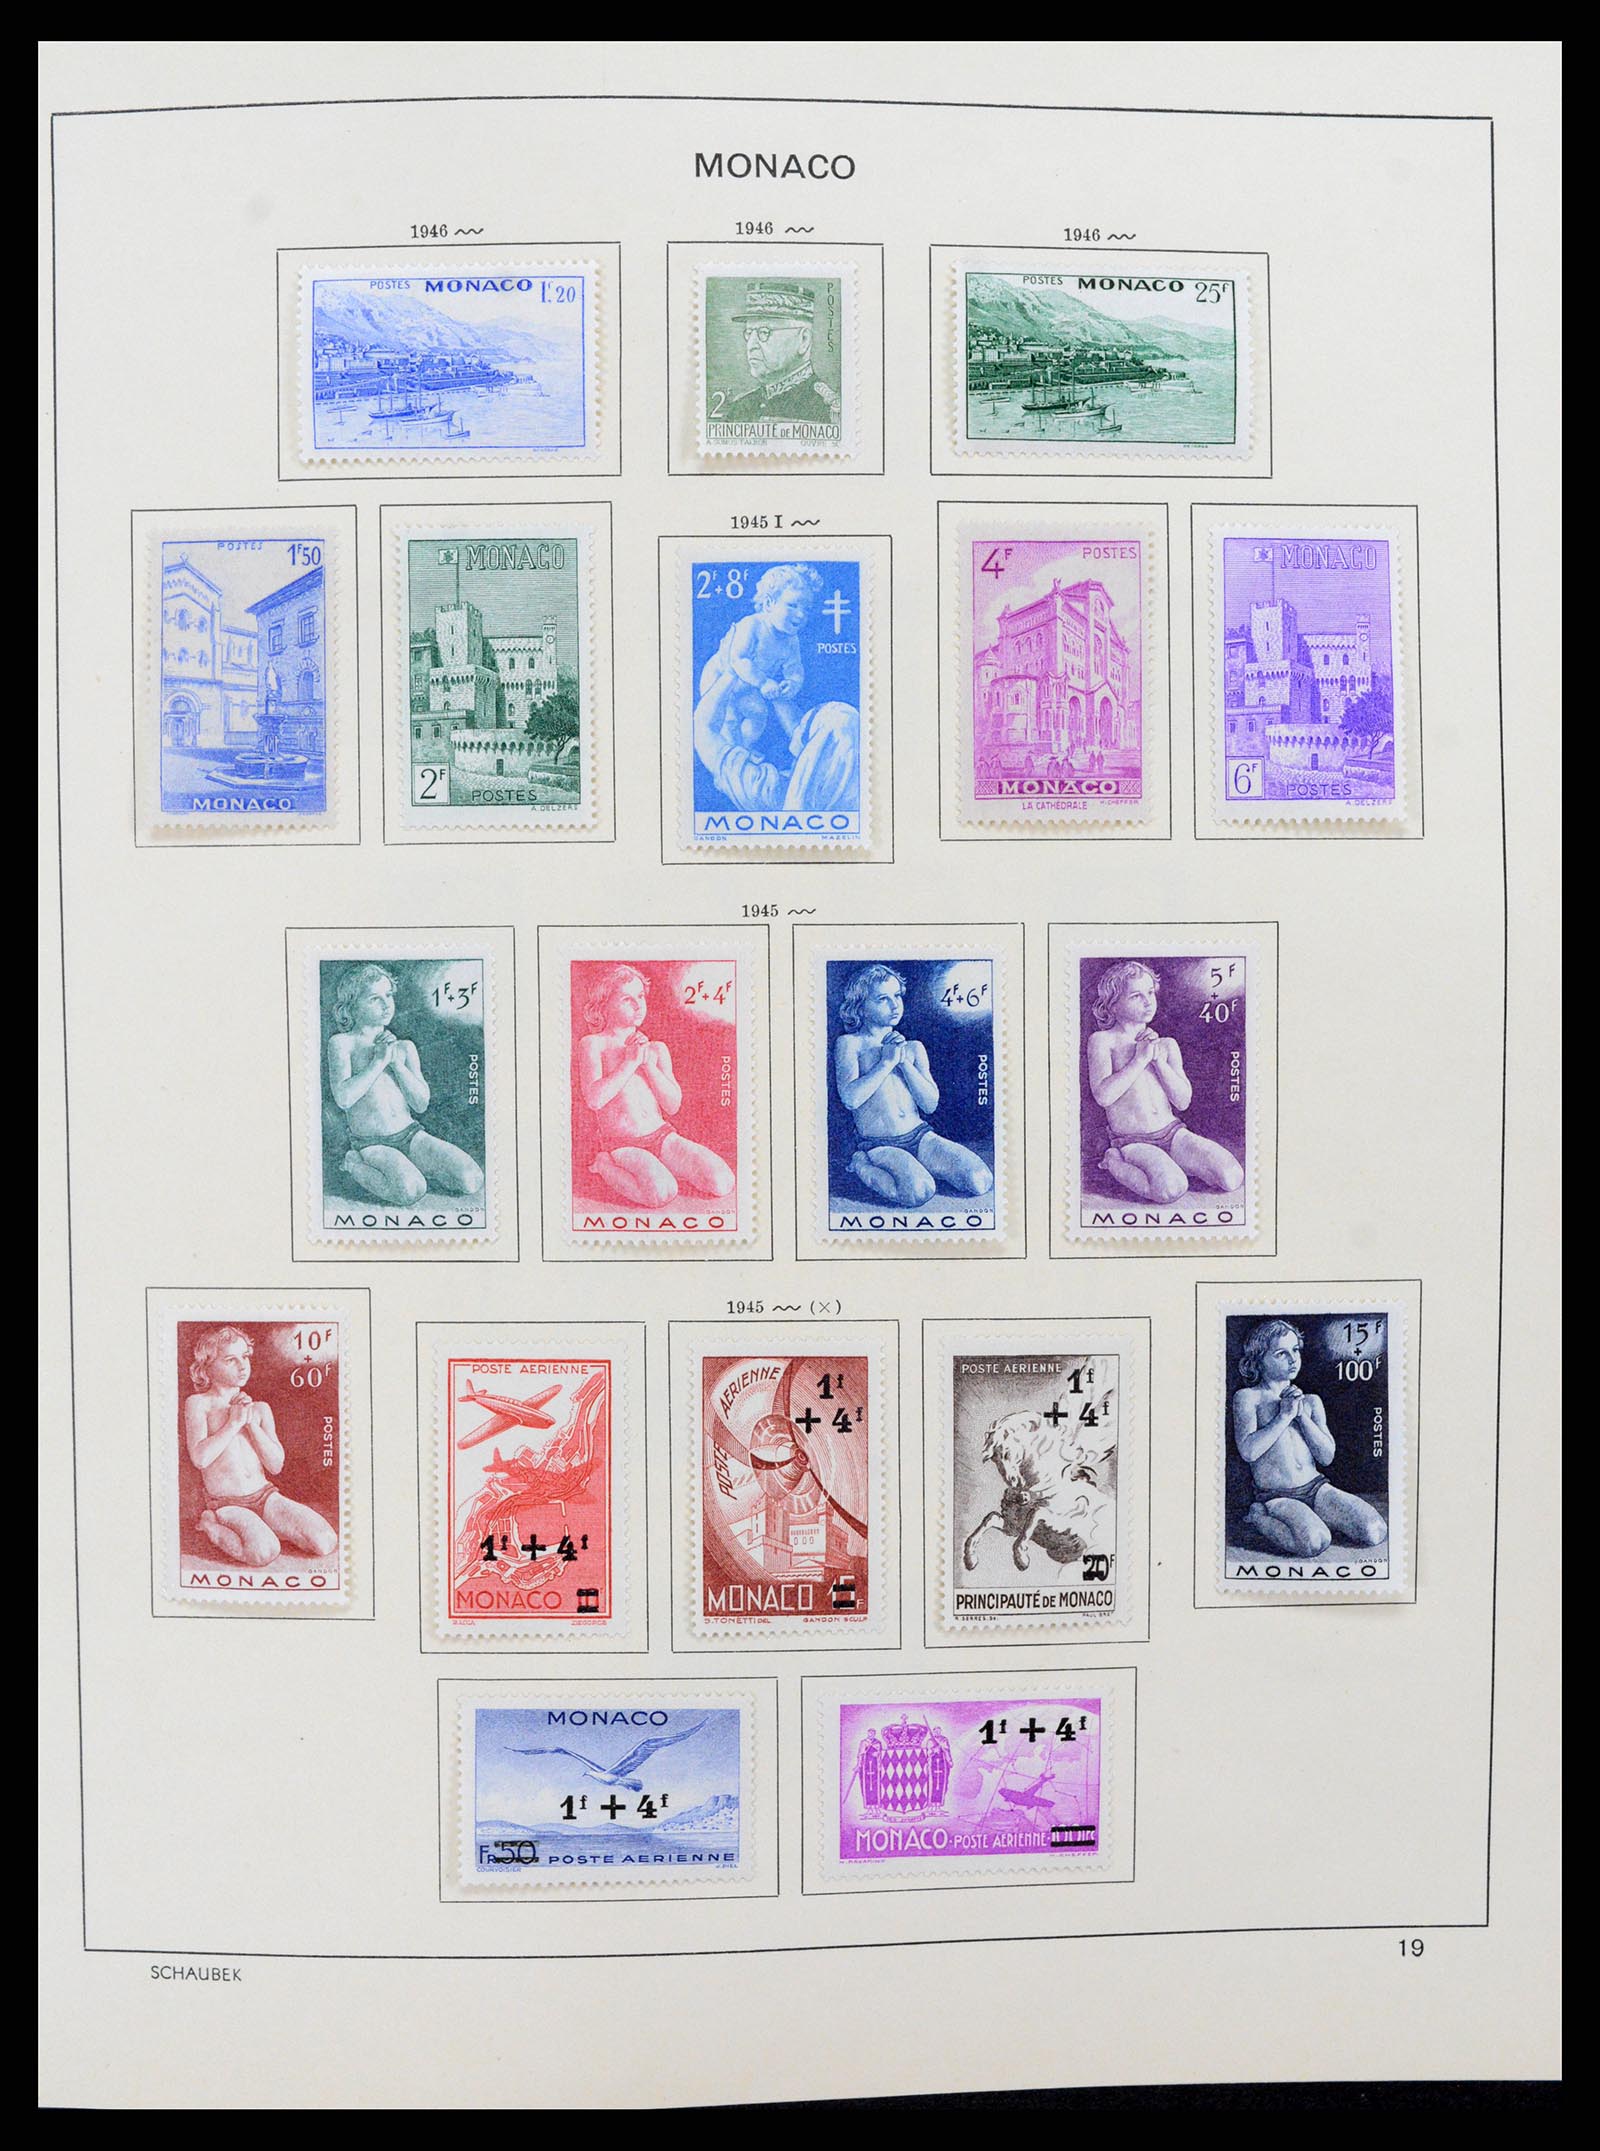 37570 019 - Stamp collection 37570 Monaco 1885-2013.